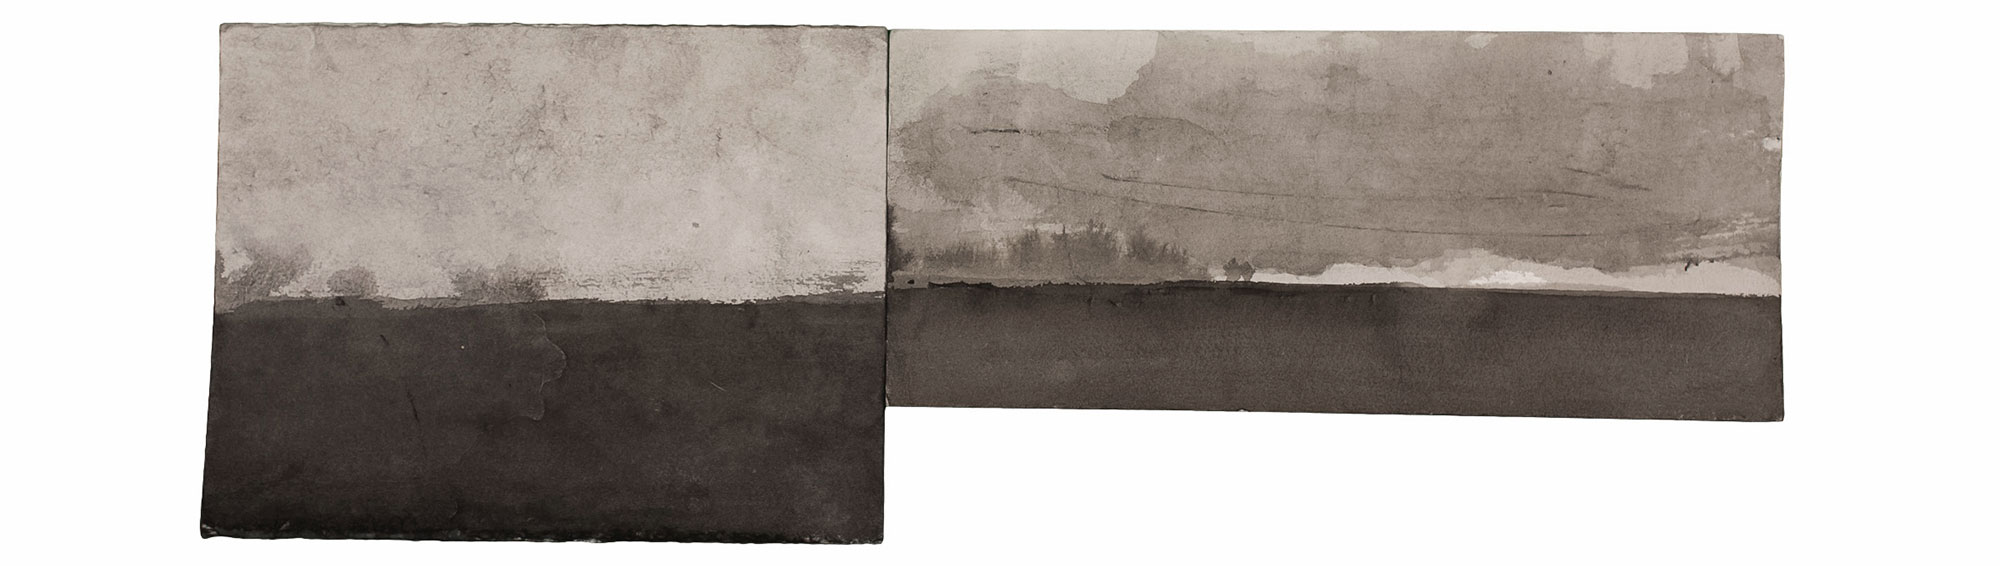   Sem Título, 2017. Nanquim   sobre   papel. 42,5 x 14 cm     Untitled, 2017. Ink on paper. 42,5 x 14 cm   